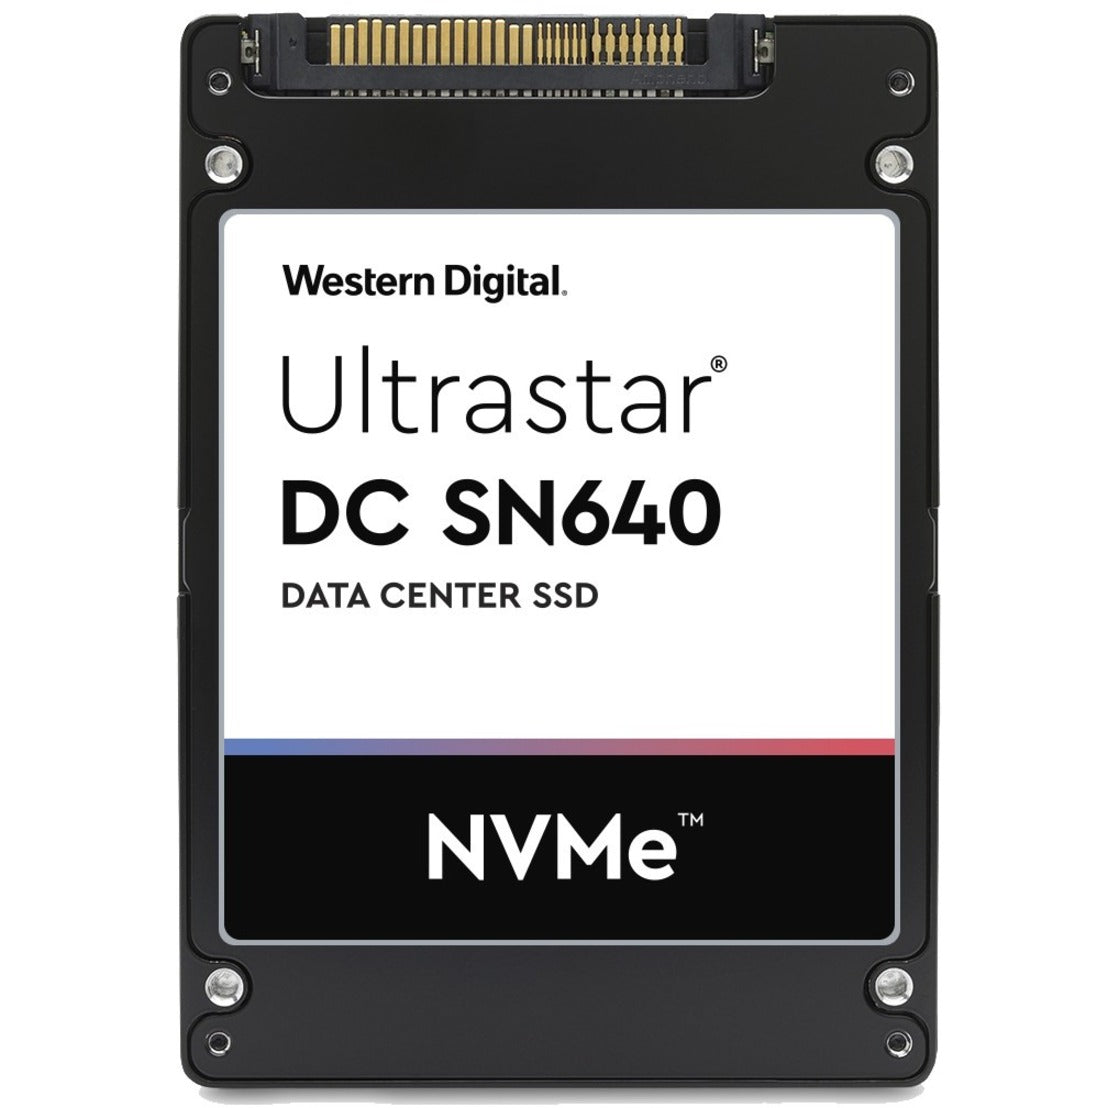 Western Digital 0TS1930 Ultrastar DC SN640 WUS4BB076D7P3E3 Solid State Drive, 7.5 TB Storage Capacity, 256-bit Encryption, Read Intensive, 5 Year Warranty